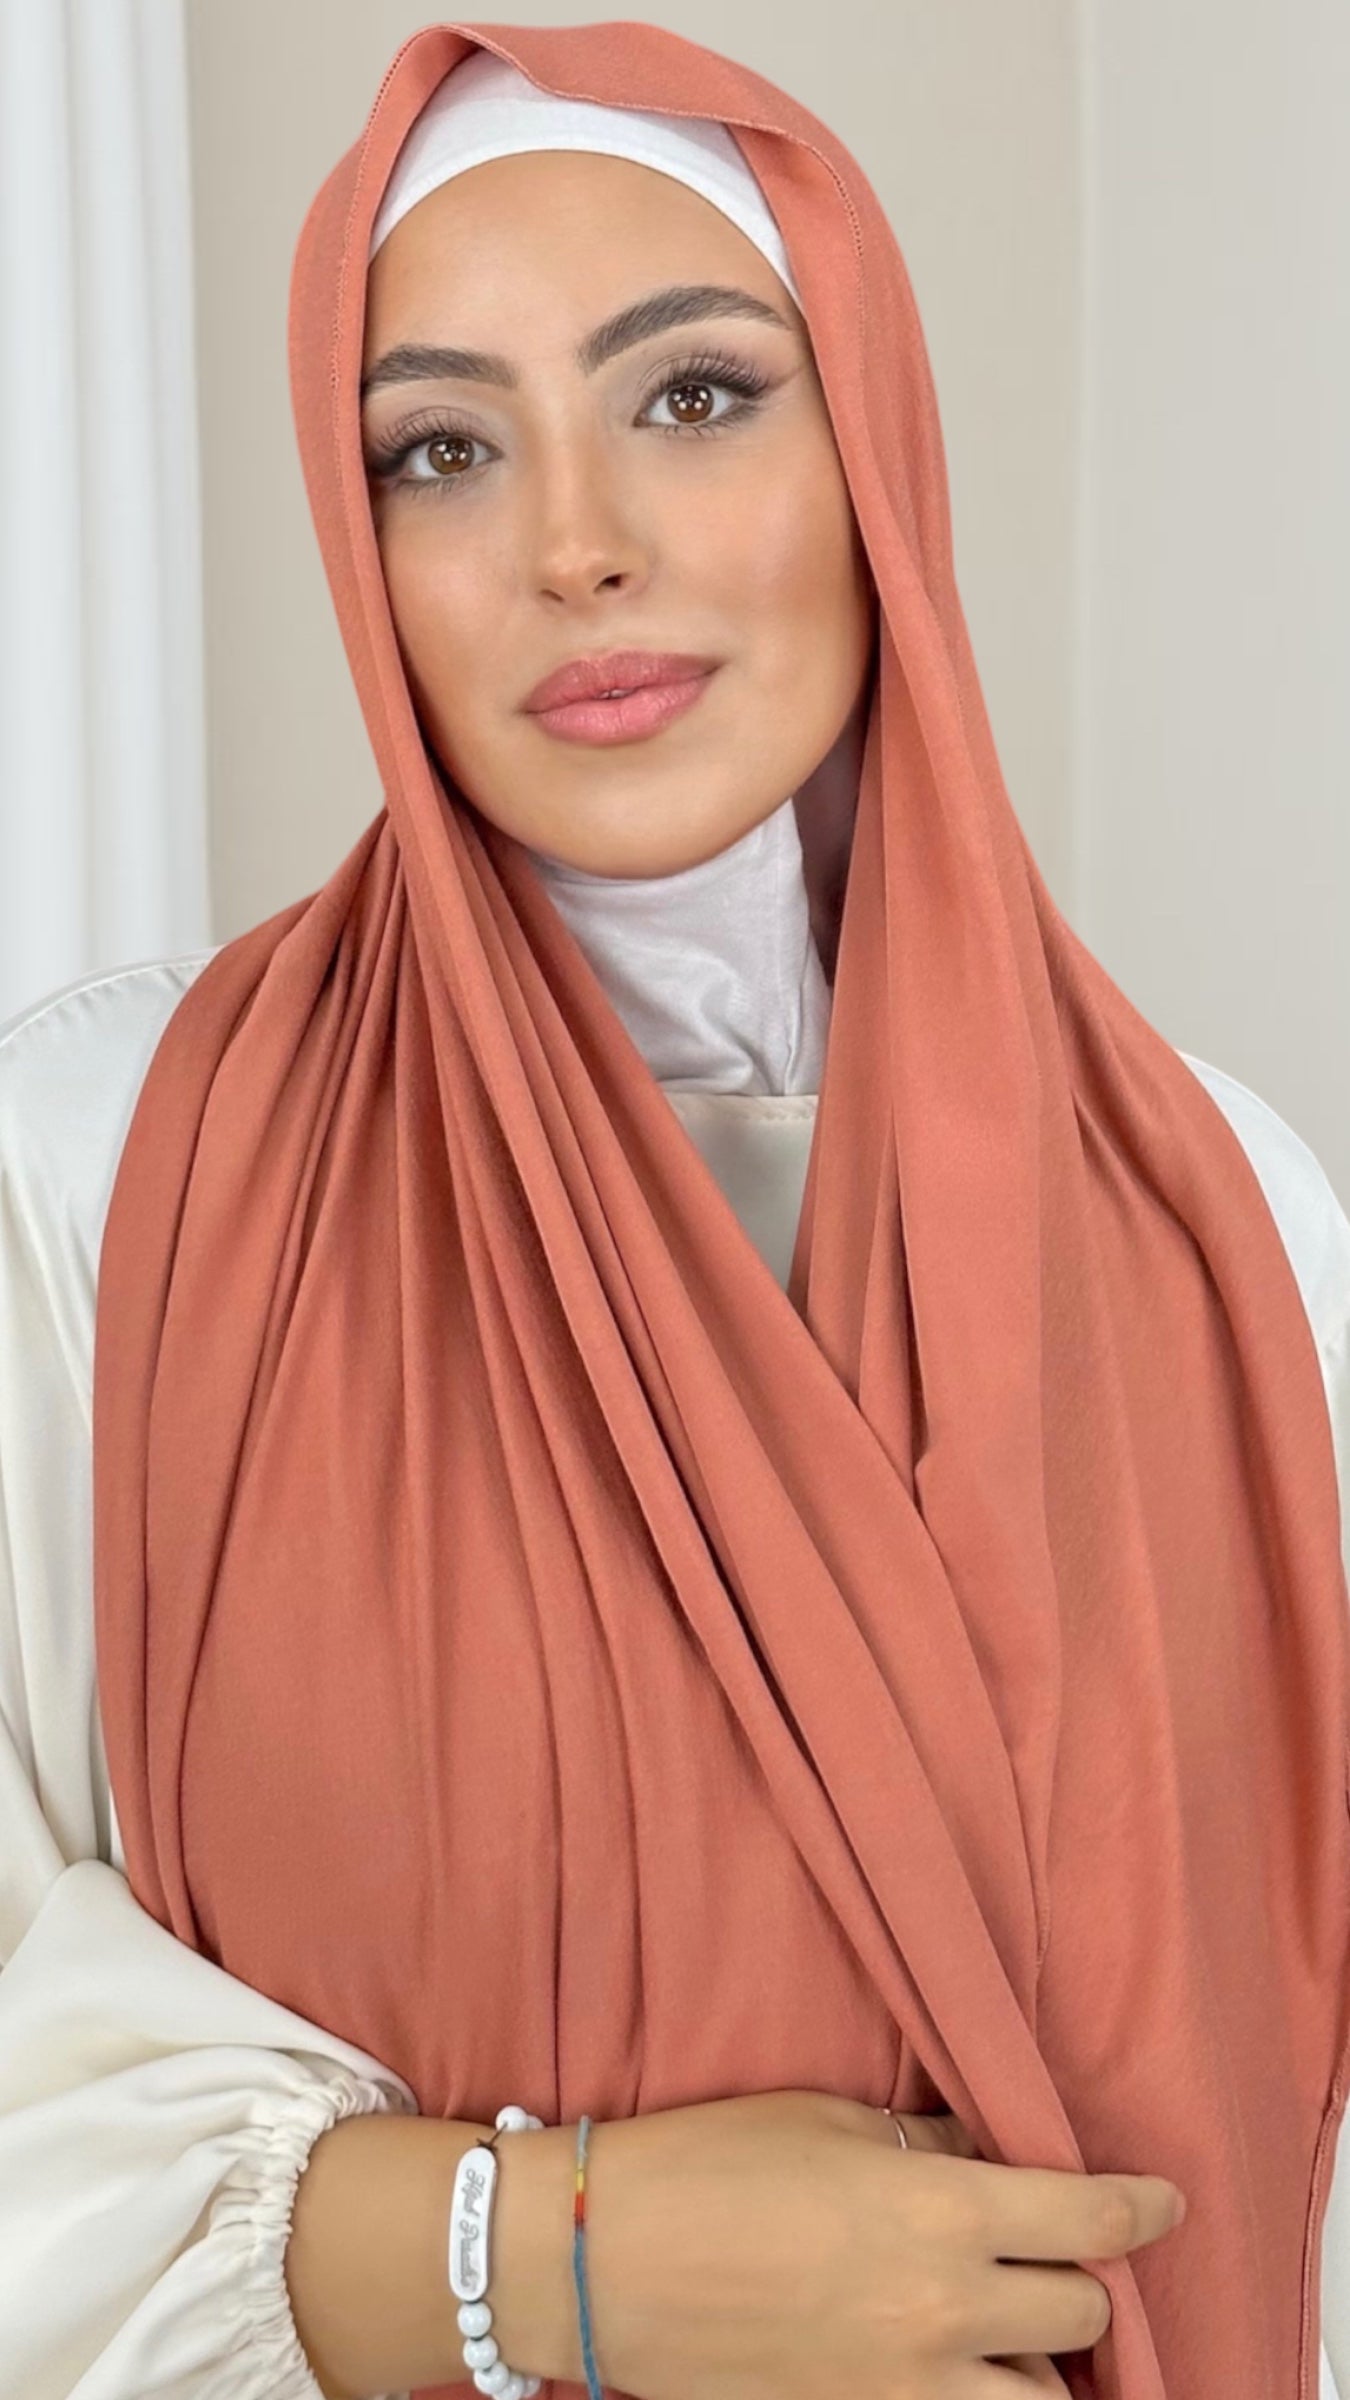 Hijab Jersey rosa rubicondo-orlo Flatlock - Hijab Paradise Hijab, chador, velo, turbante, foulard, copricapo, musulmano, islamico, sciarpa, Hijab Jersey rosa rubicondo-orlo Flatlock